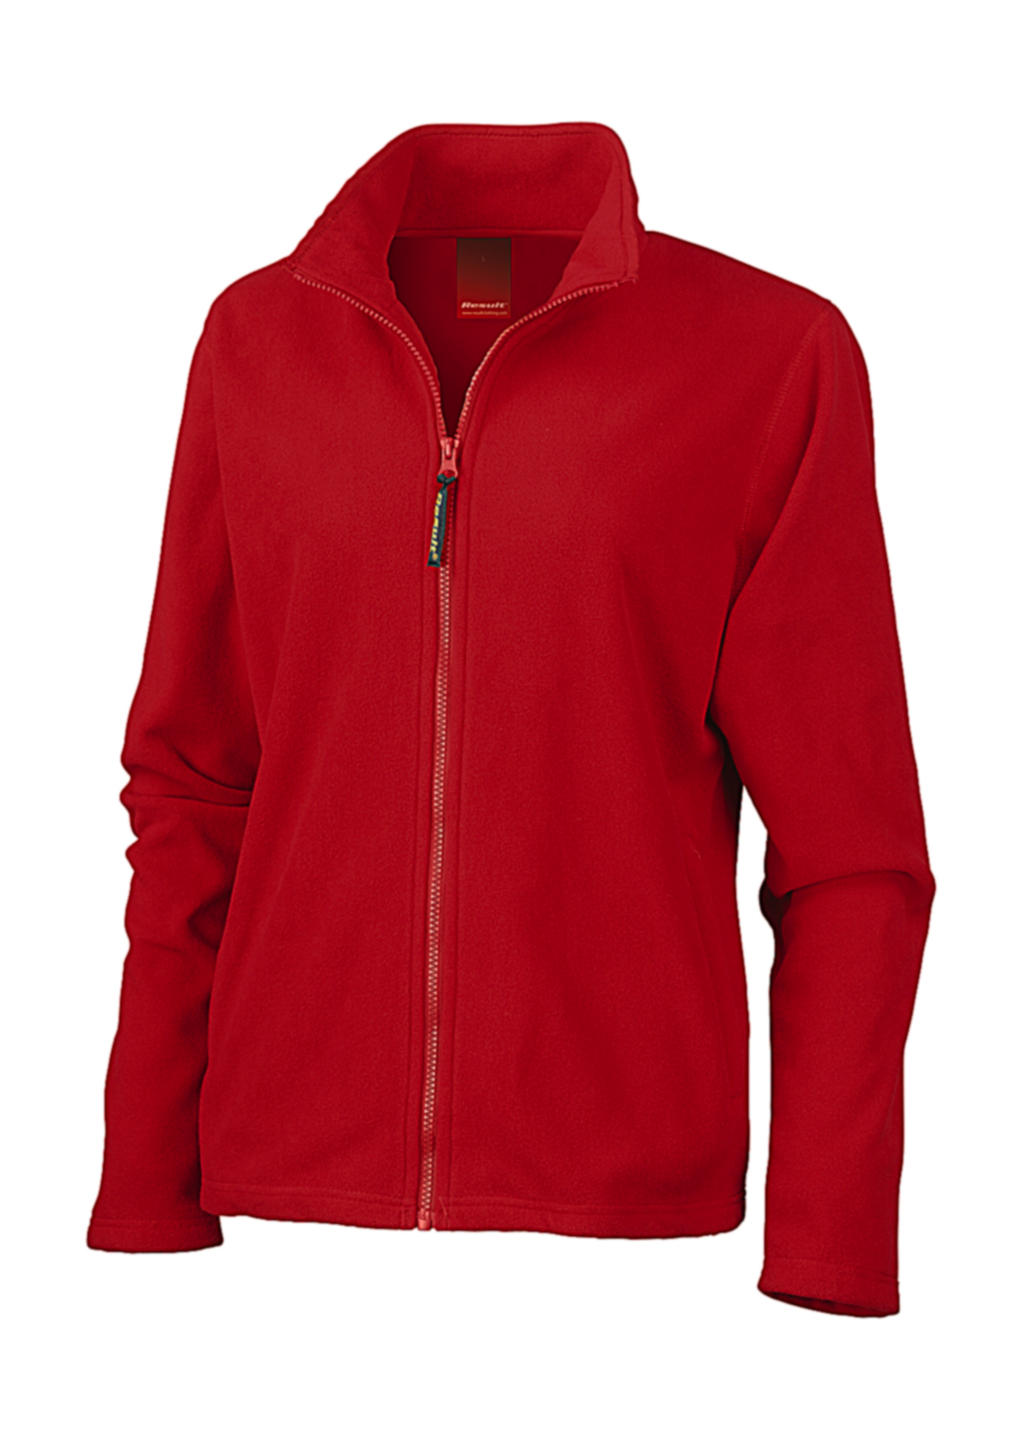  Ladies Horizon High Grade Microfleece Jacket in Farbe Cardinal Red